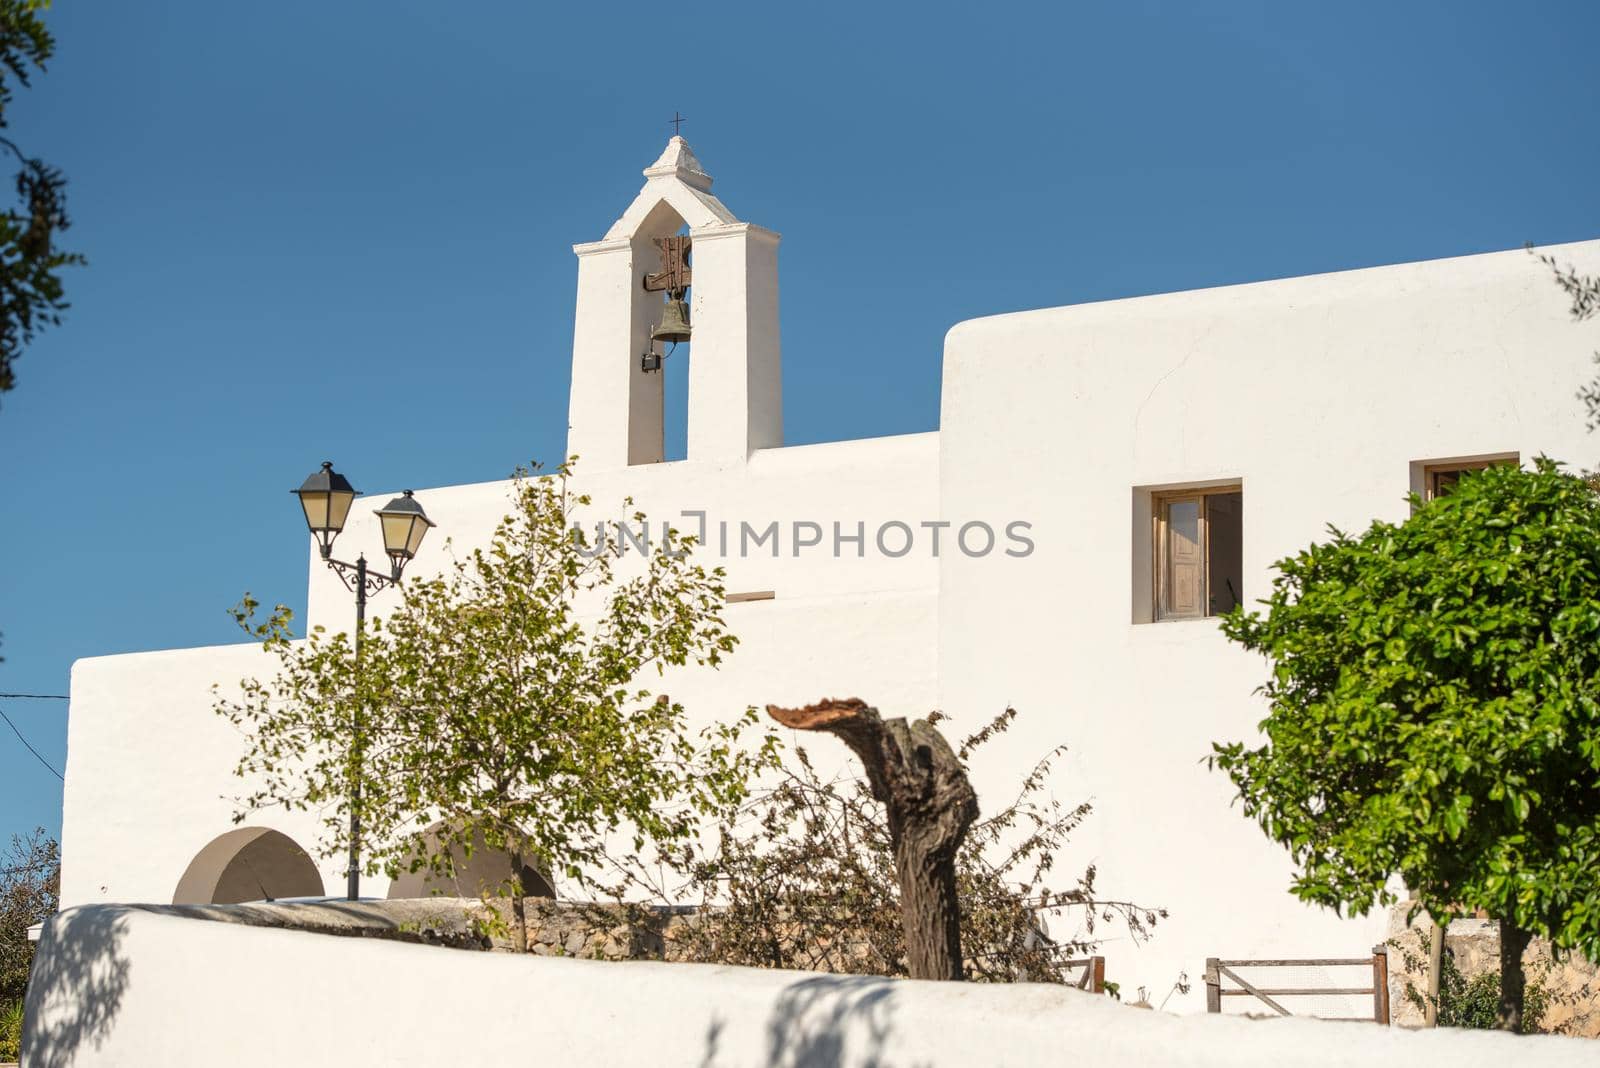 Old White Church of Santa Anges de la Corona, Ibiza, Spain.